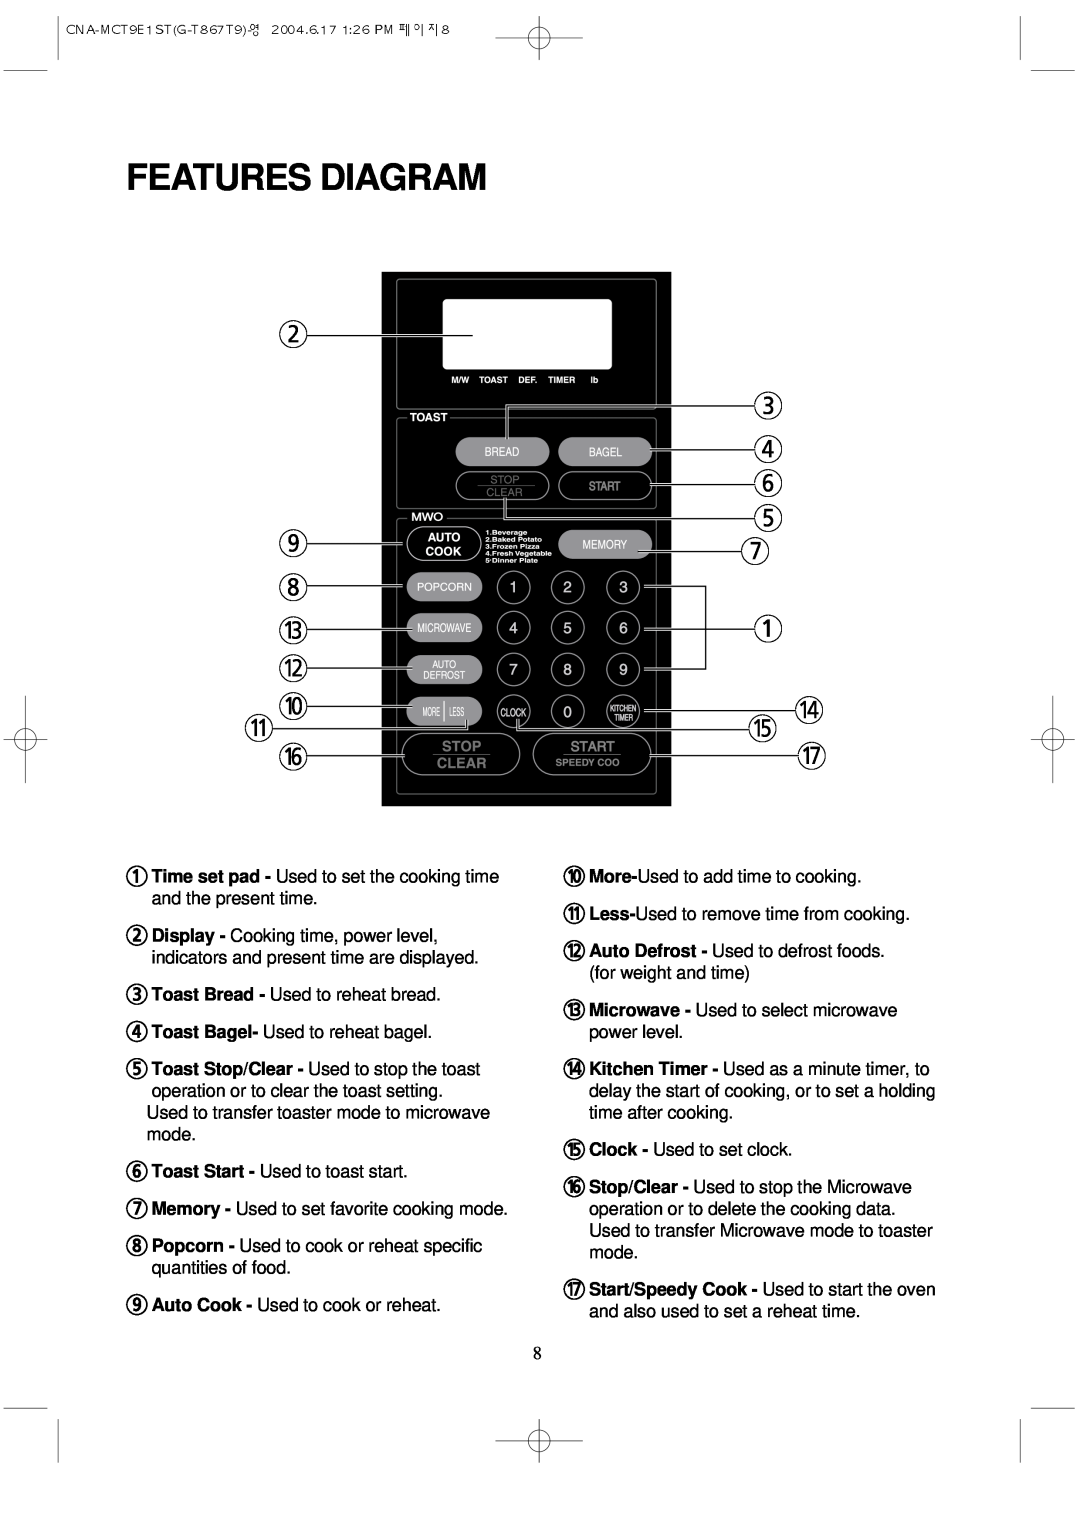 Magic Chef MCT9E1ST manual Features Diagram, e w q 0 y, t r u 